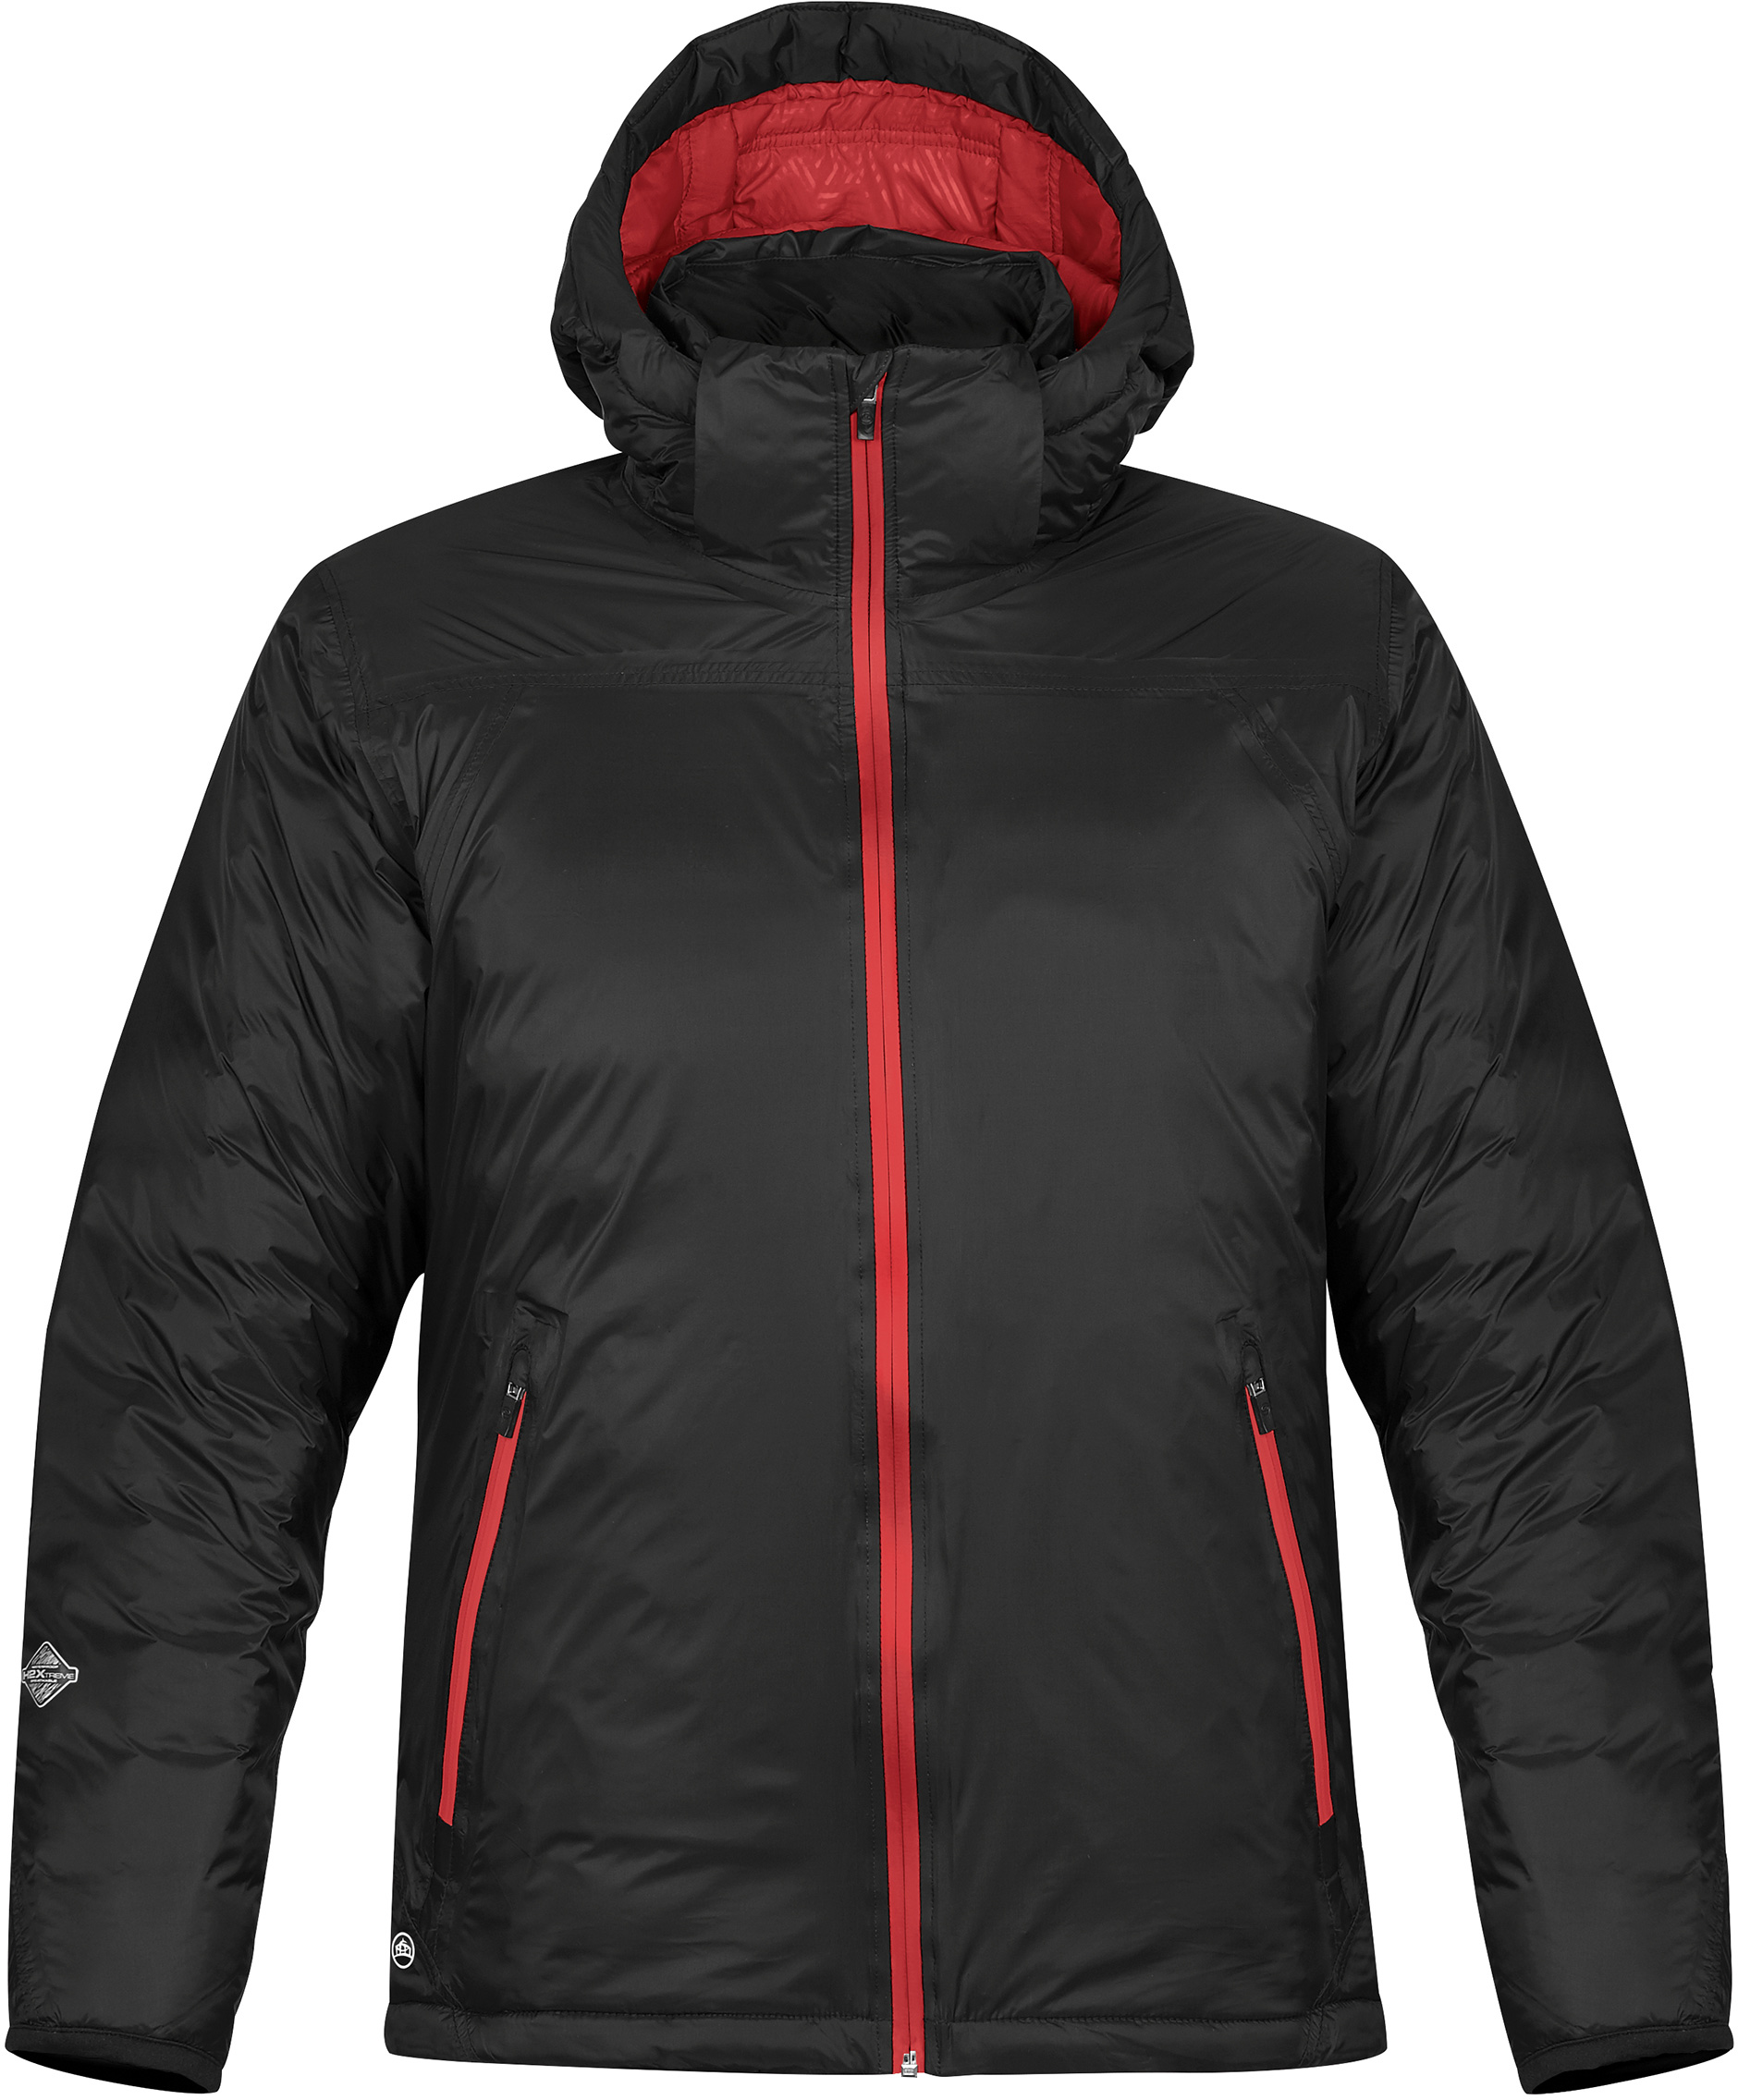 Stormtech X-1 - Men's Black Ice Thermal Jacket $119.00 - Outerwear